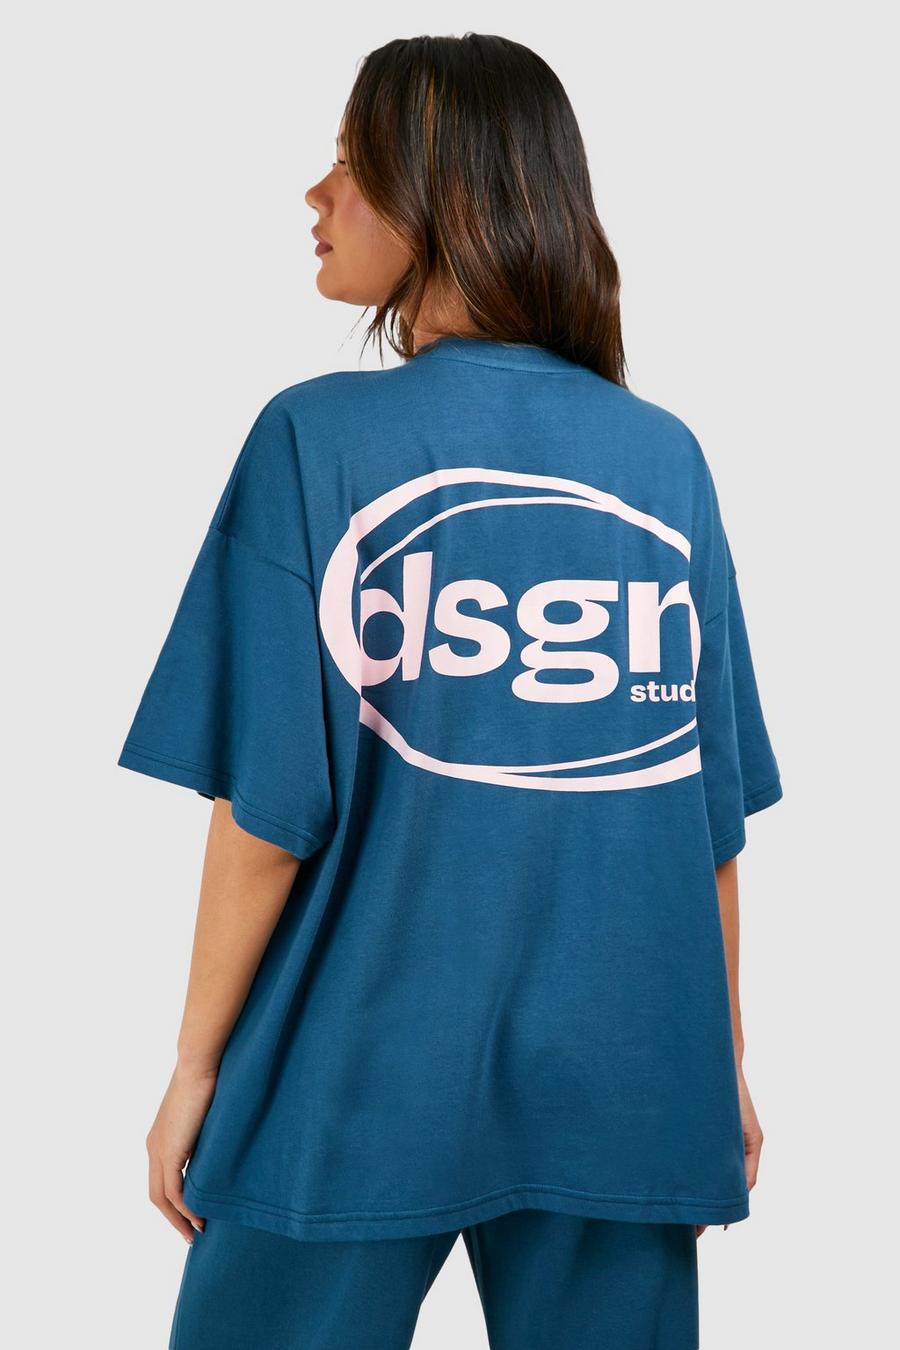 T-shirt oversize à slogan Dsgn Studio, Teal